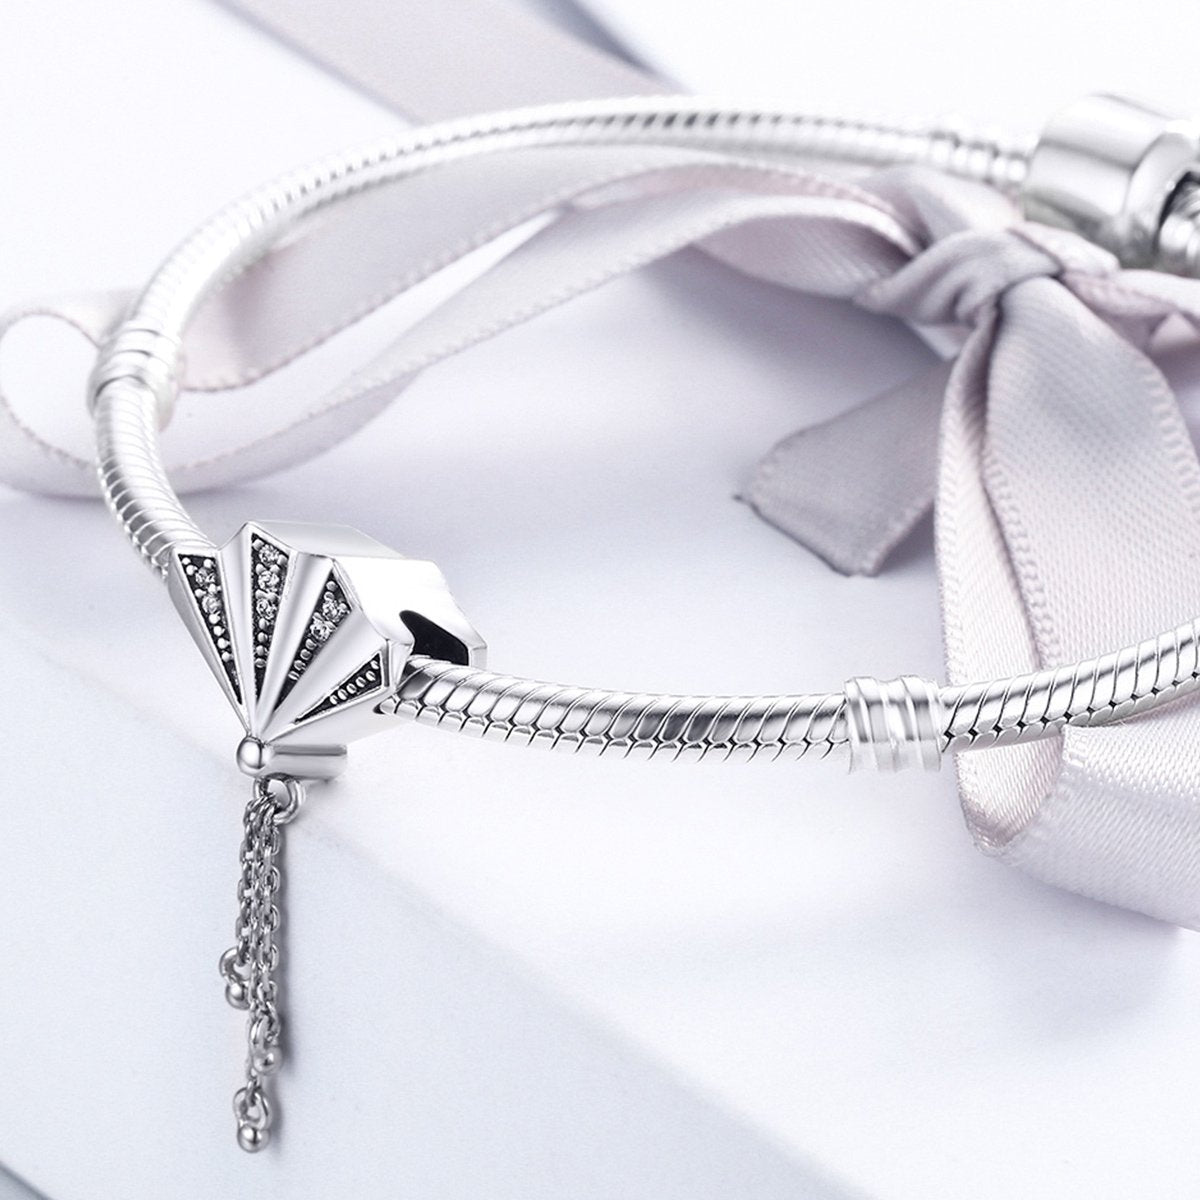 Sterling 925 silver charm the 3D diamond bead pendant fits Pandora charm and European charm bracelet Xaxe.com